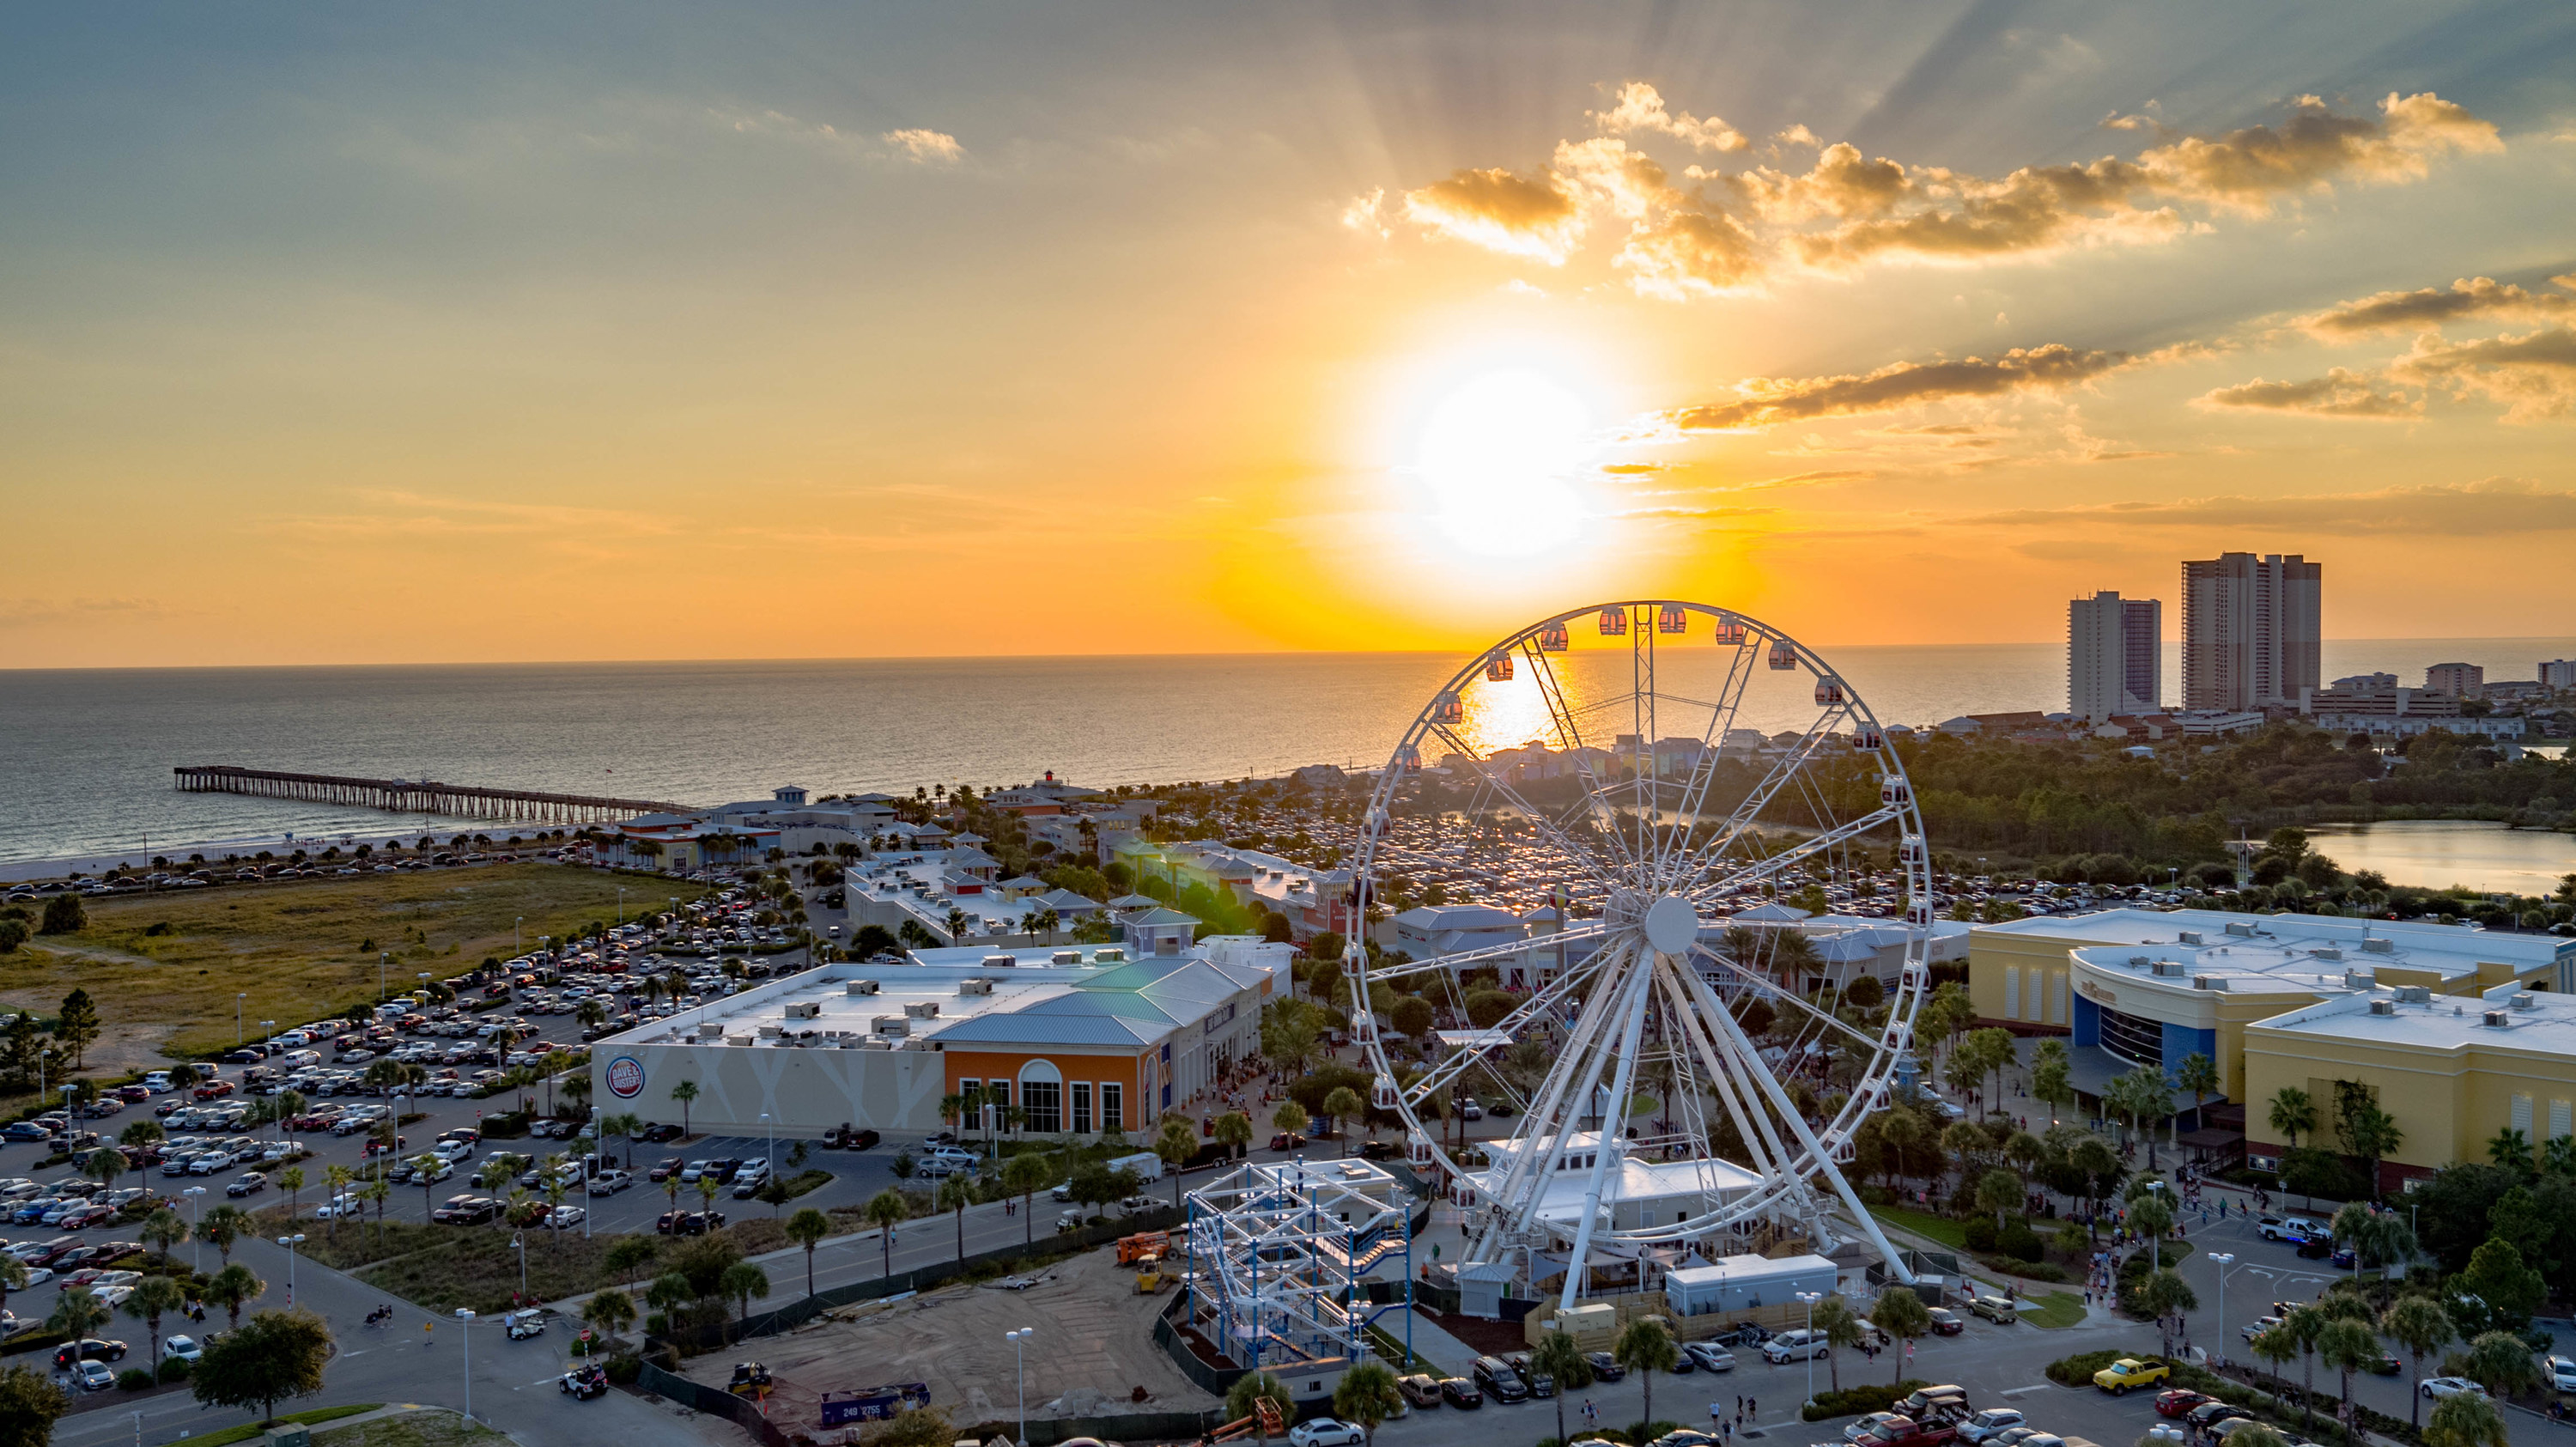 An aerial view of an amusement park at sunset featuring a ferris wheel